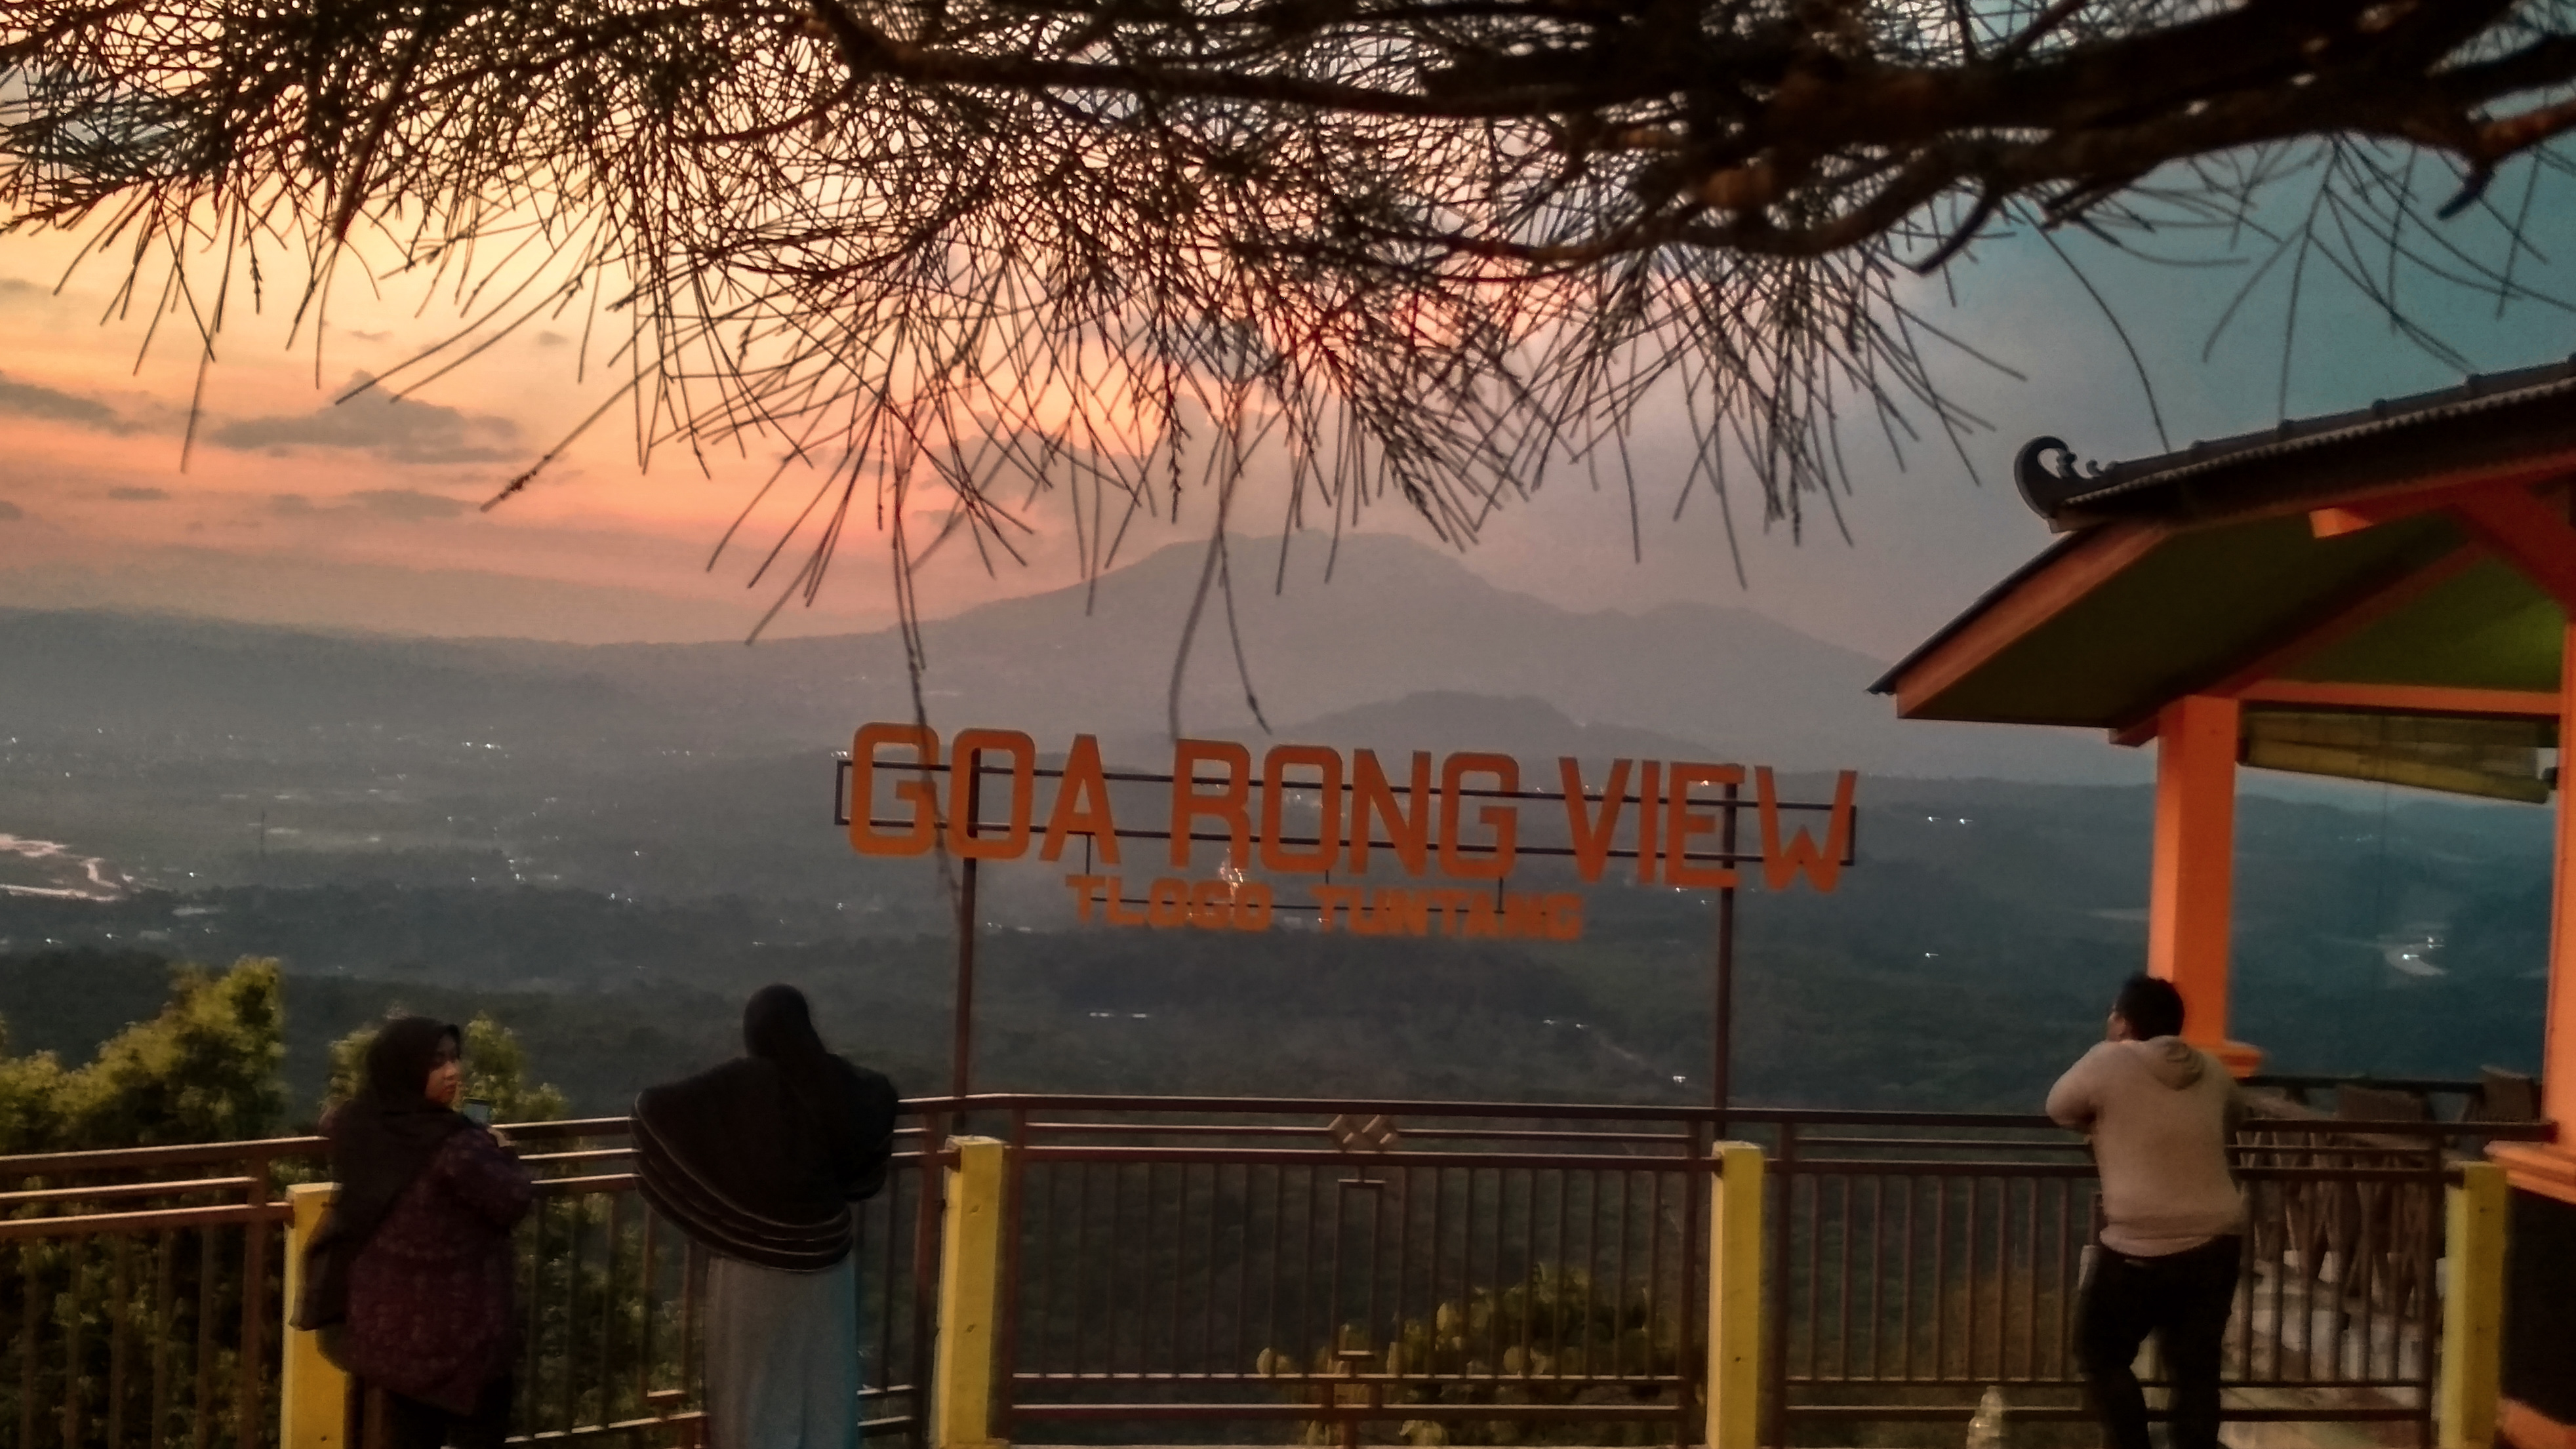 Goa Rong View, Wisata di Atas Awan Semarang dengan Sunset